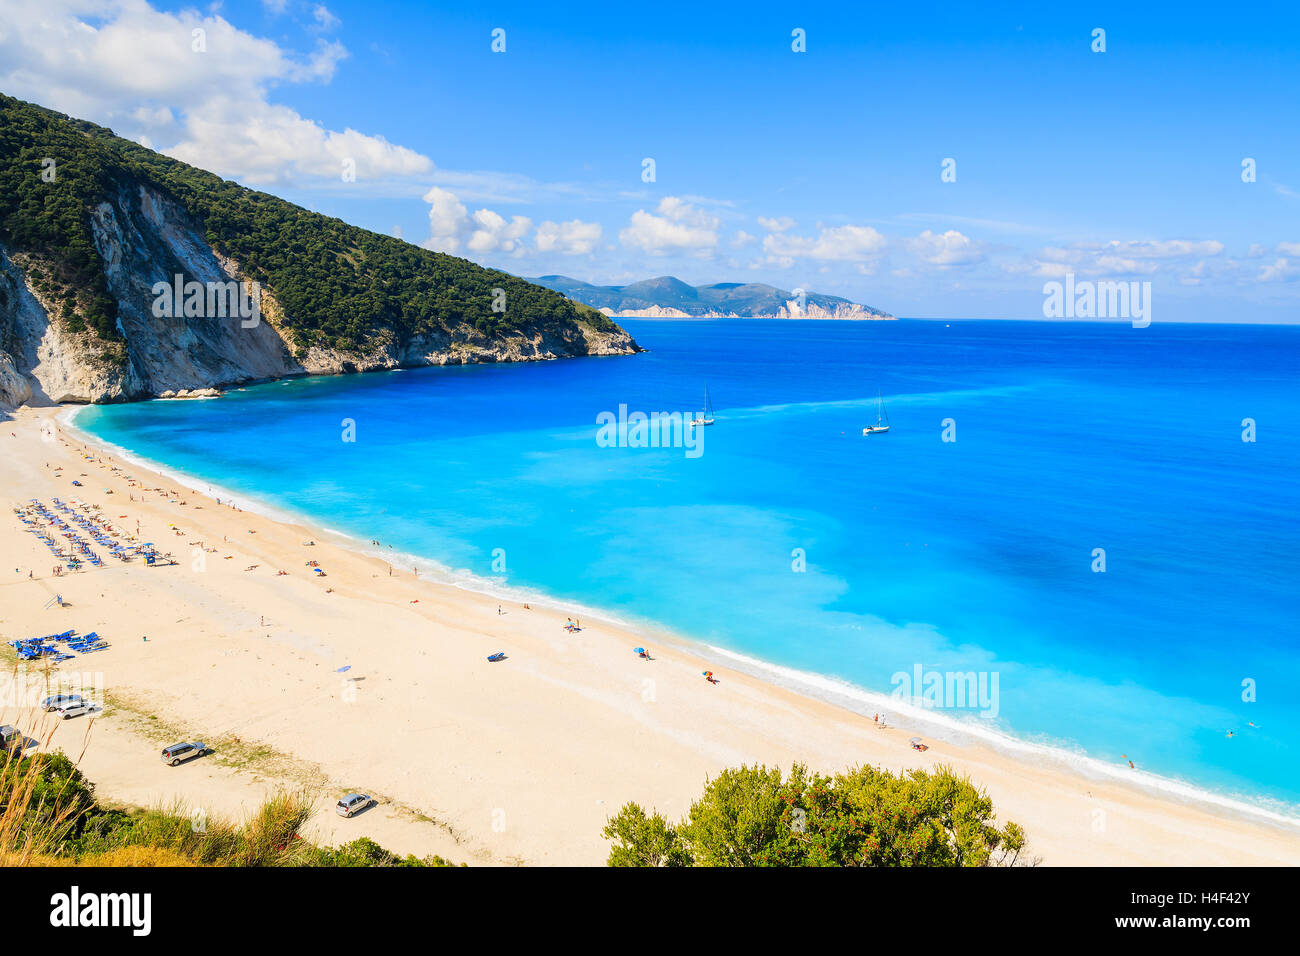 View of beautiful Myrtos bay and beach on Kefalonia island, Greece Stock Photo